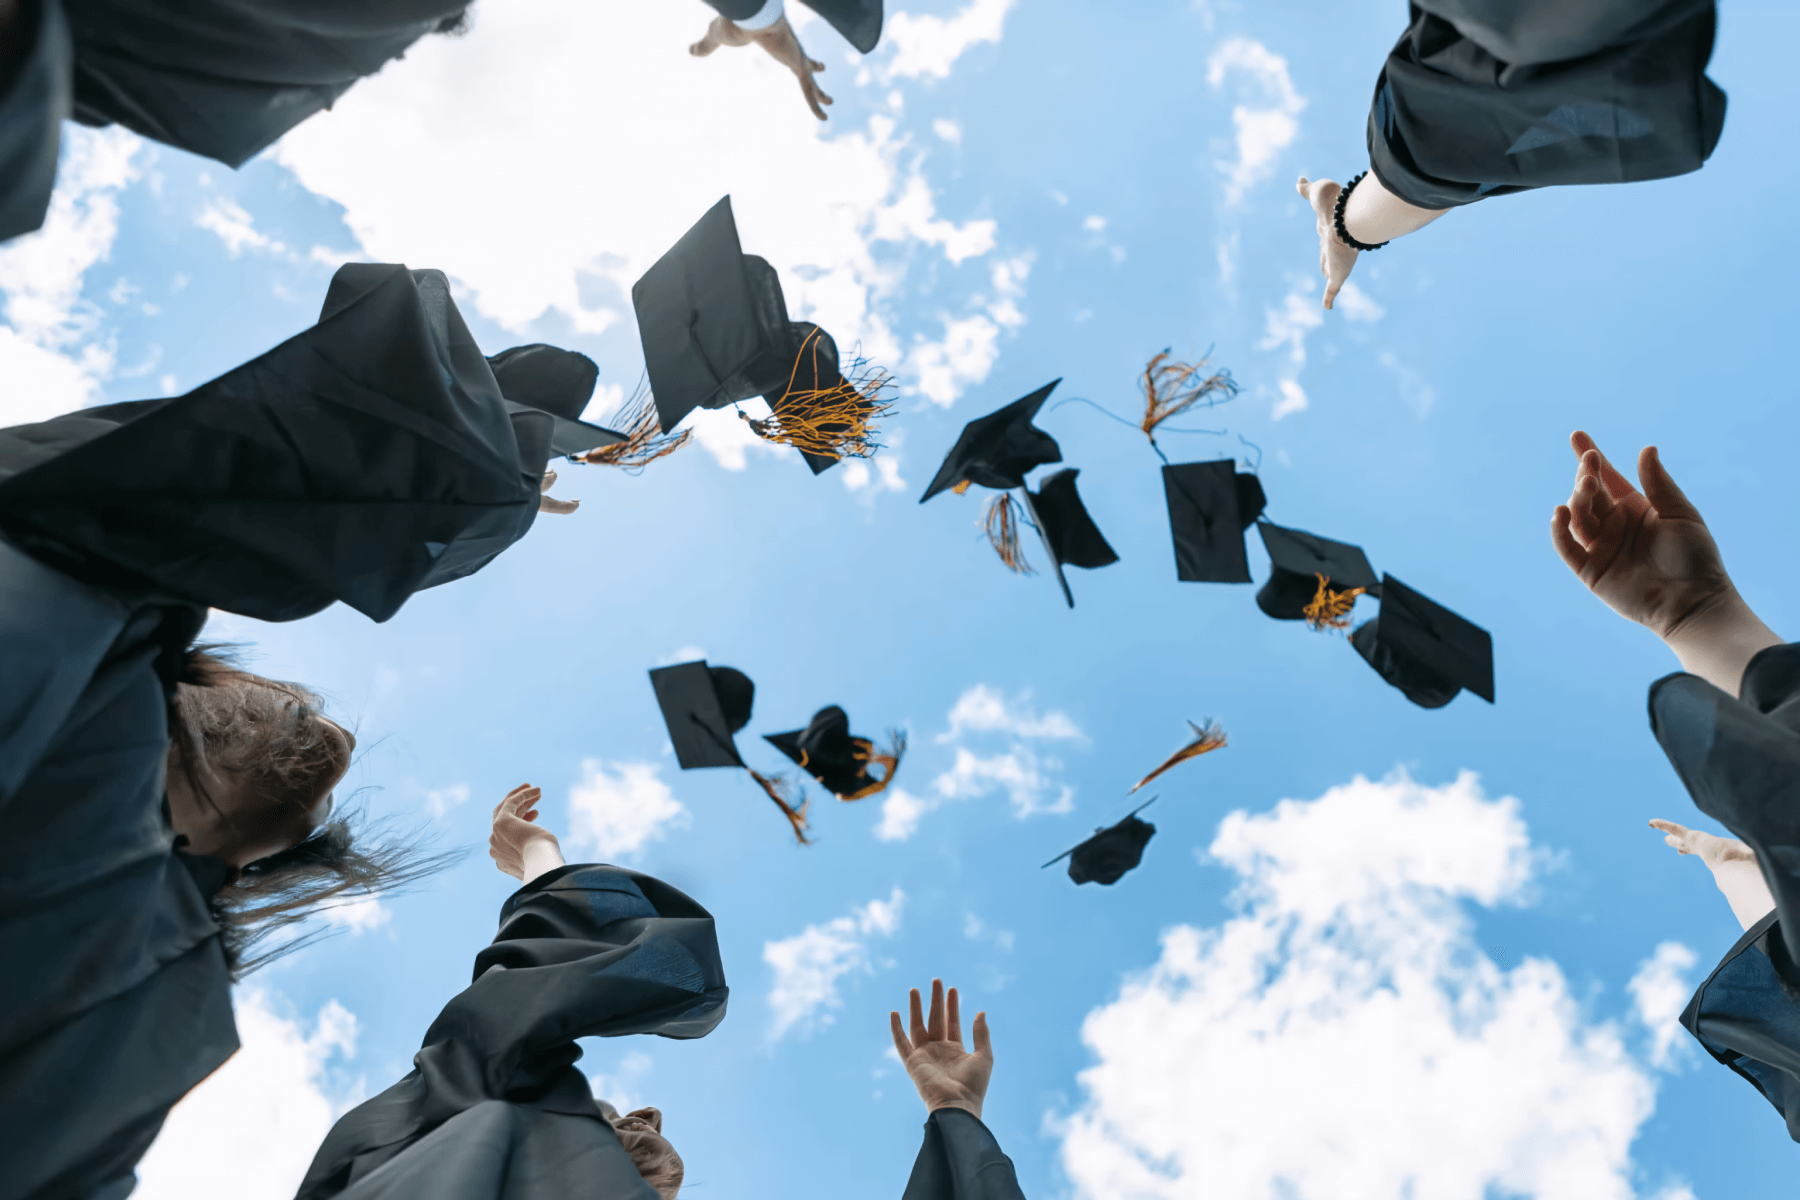 Graduation caps are tossed into a blue sky.